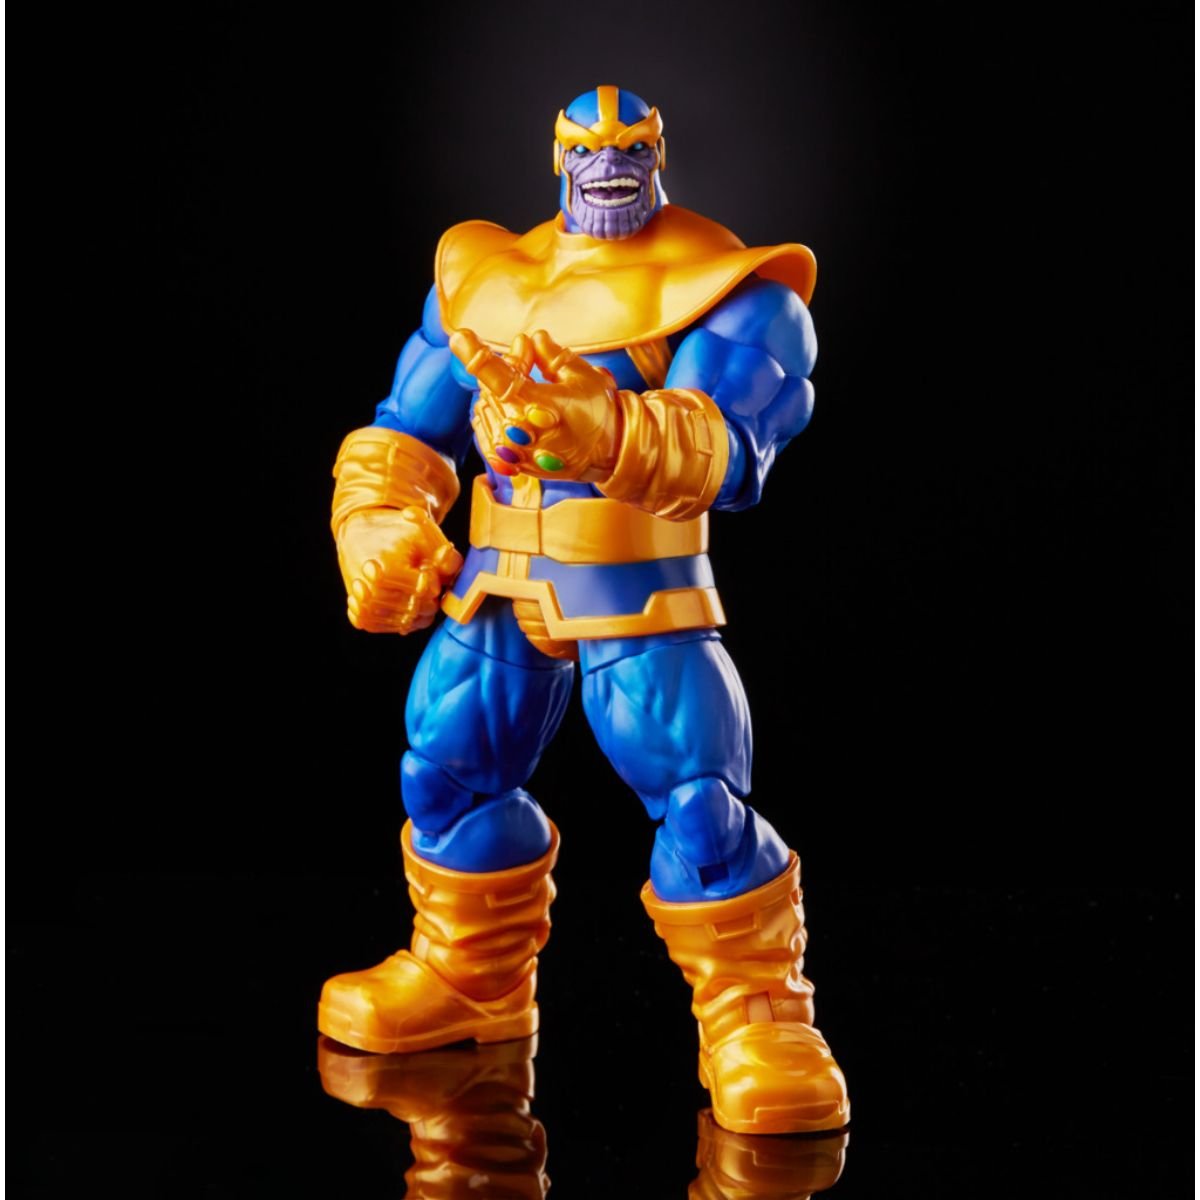 Thanos Hasbro Marvel Legends Series